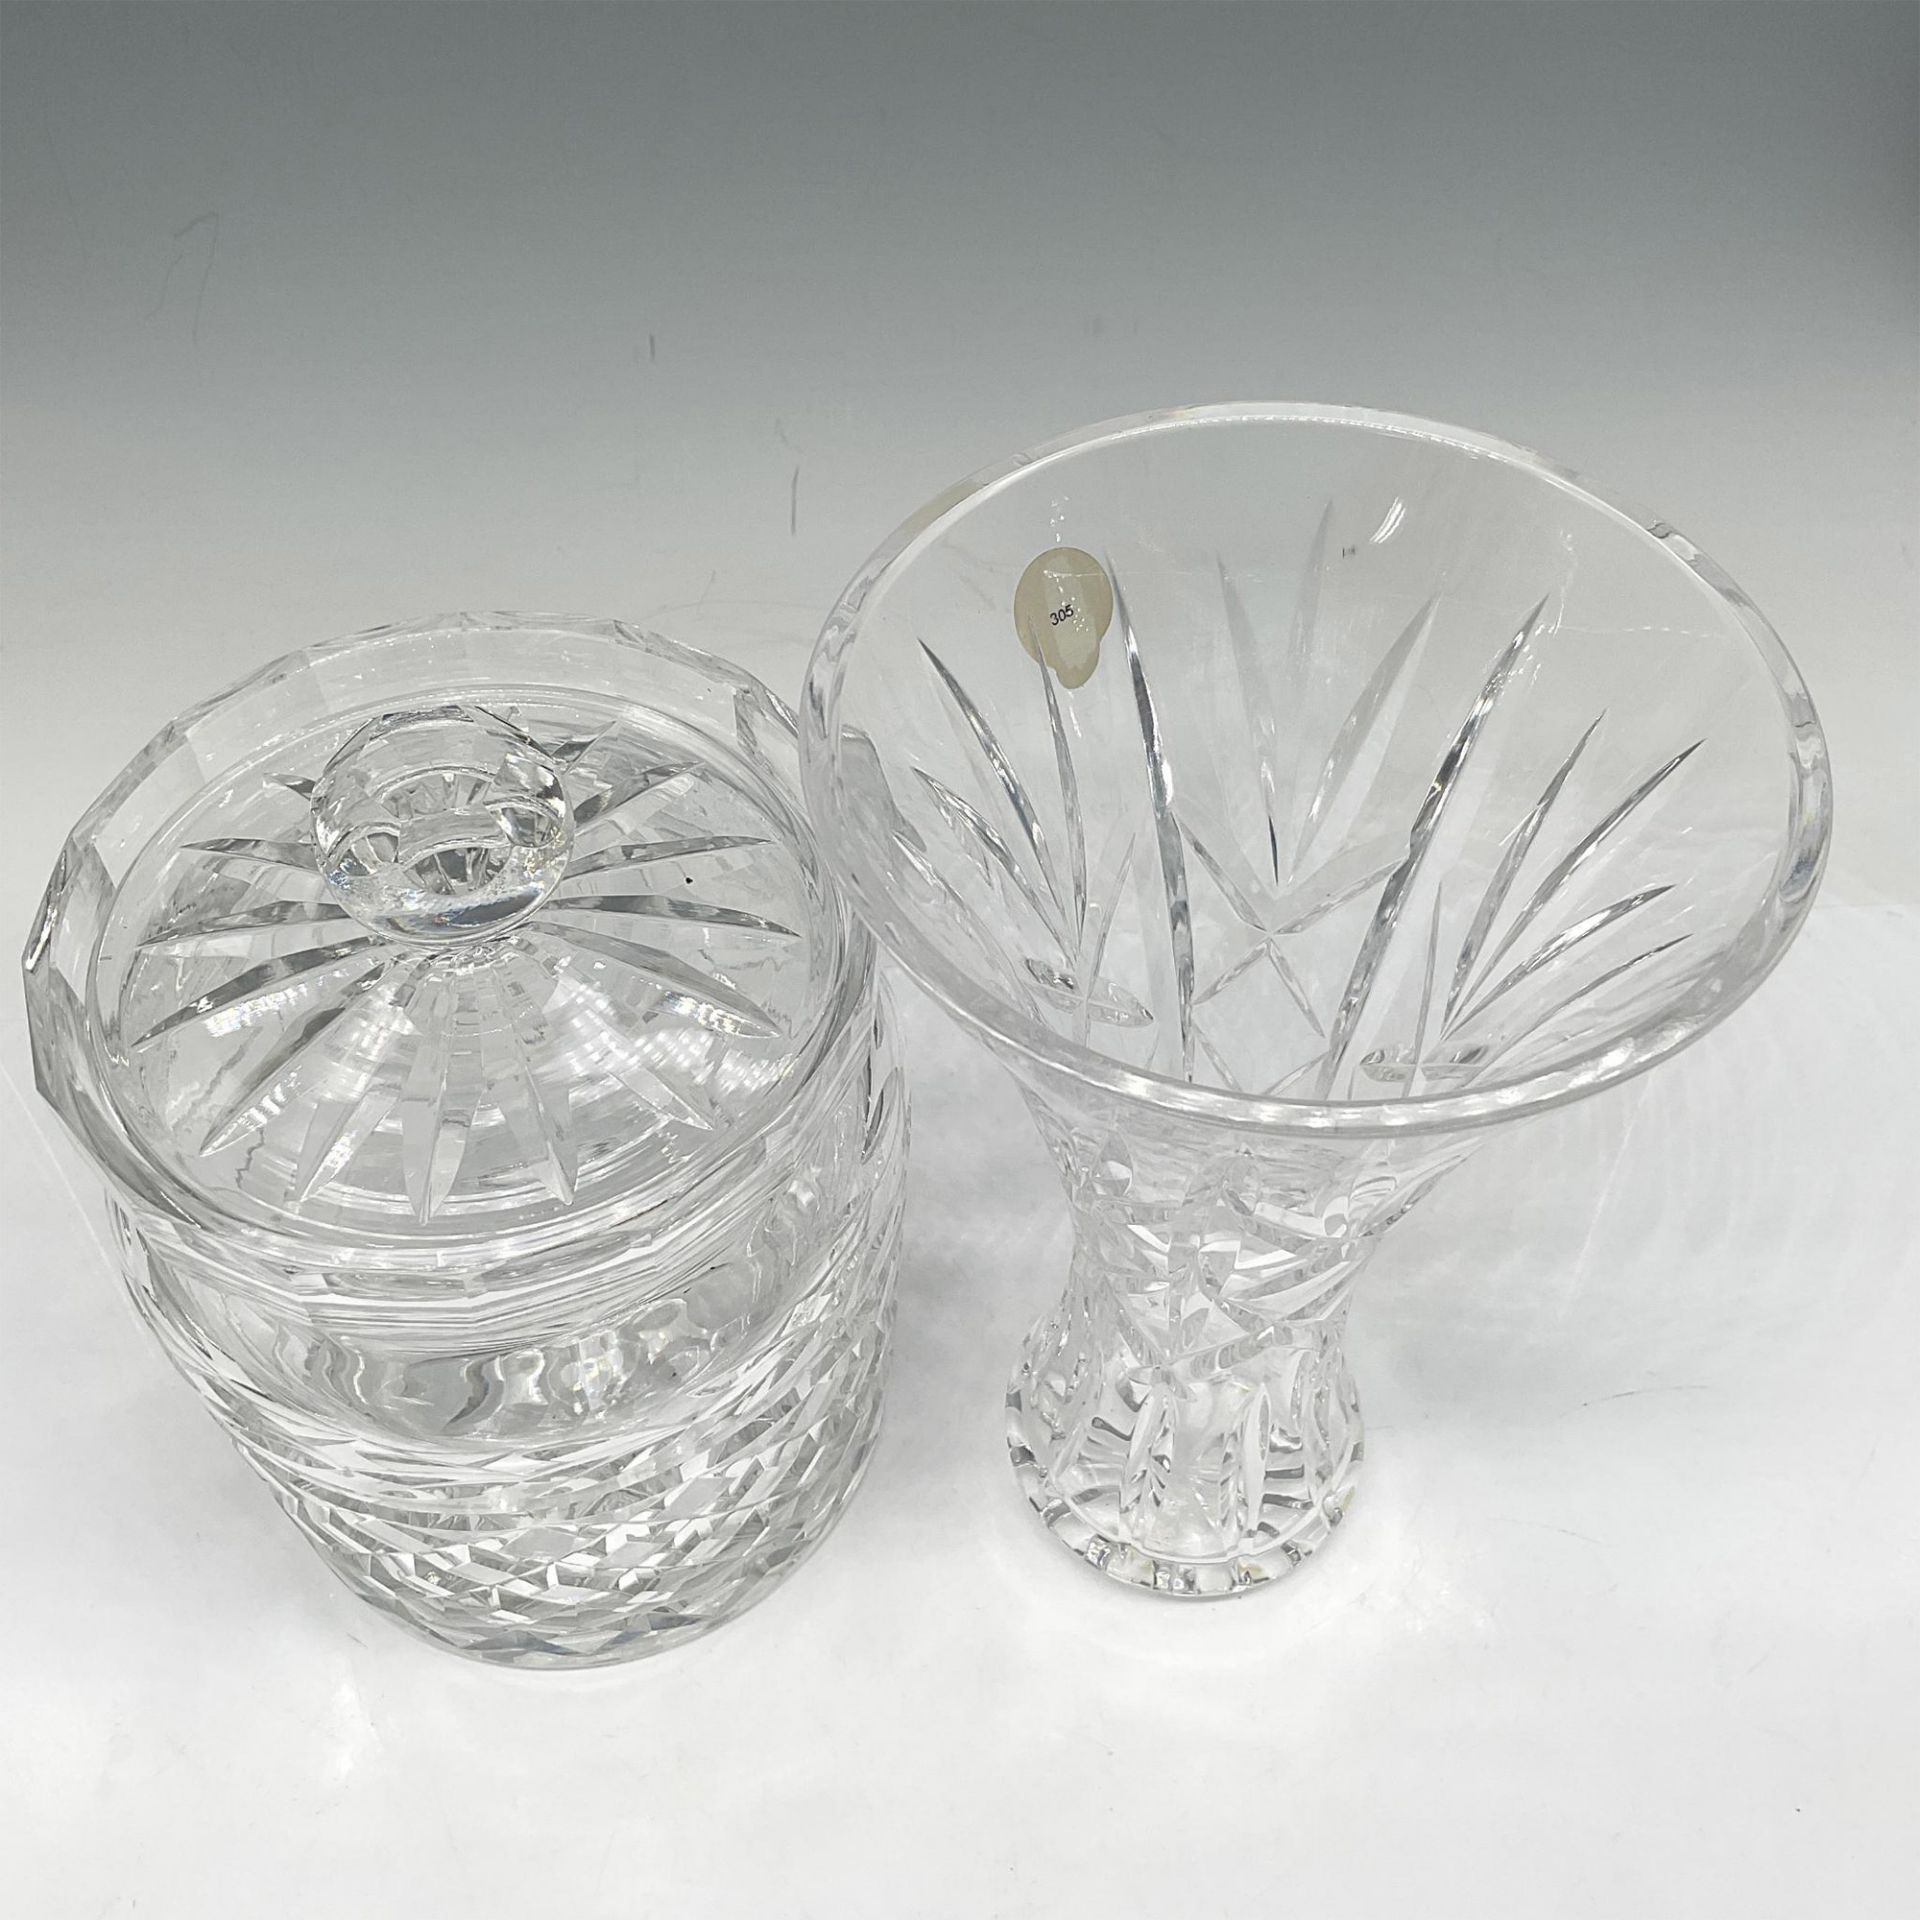 Waterford Crystal Vase 8" and Cookie Jar with Lid - Image 2 of 3